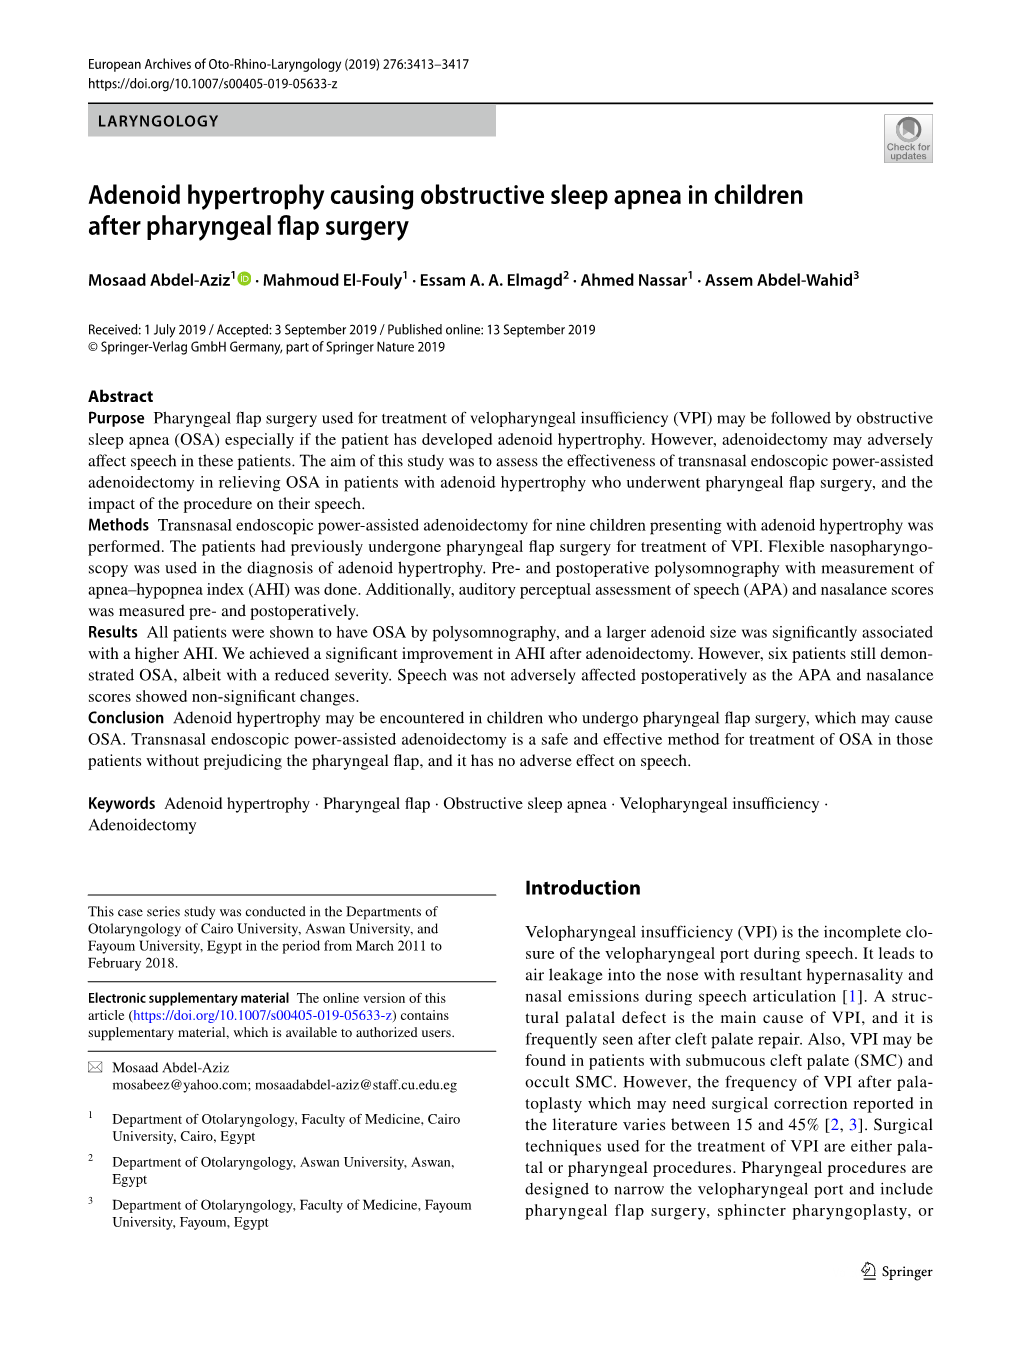 Adenoid Hypertrophy Causing Obstructive Sleep Apnea in Children After Pharyngeal Fap Surgery